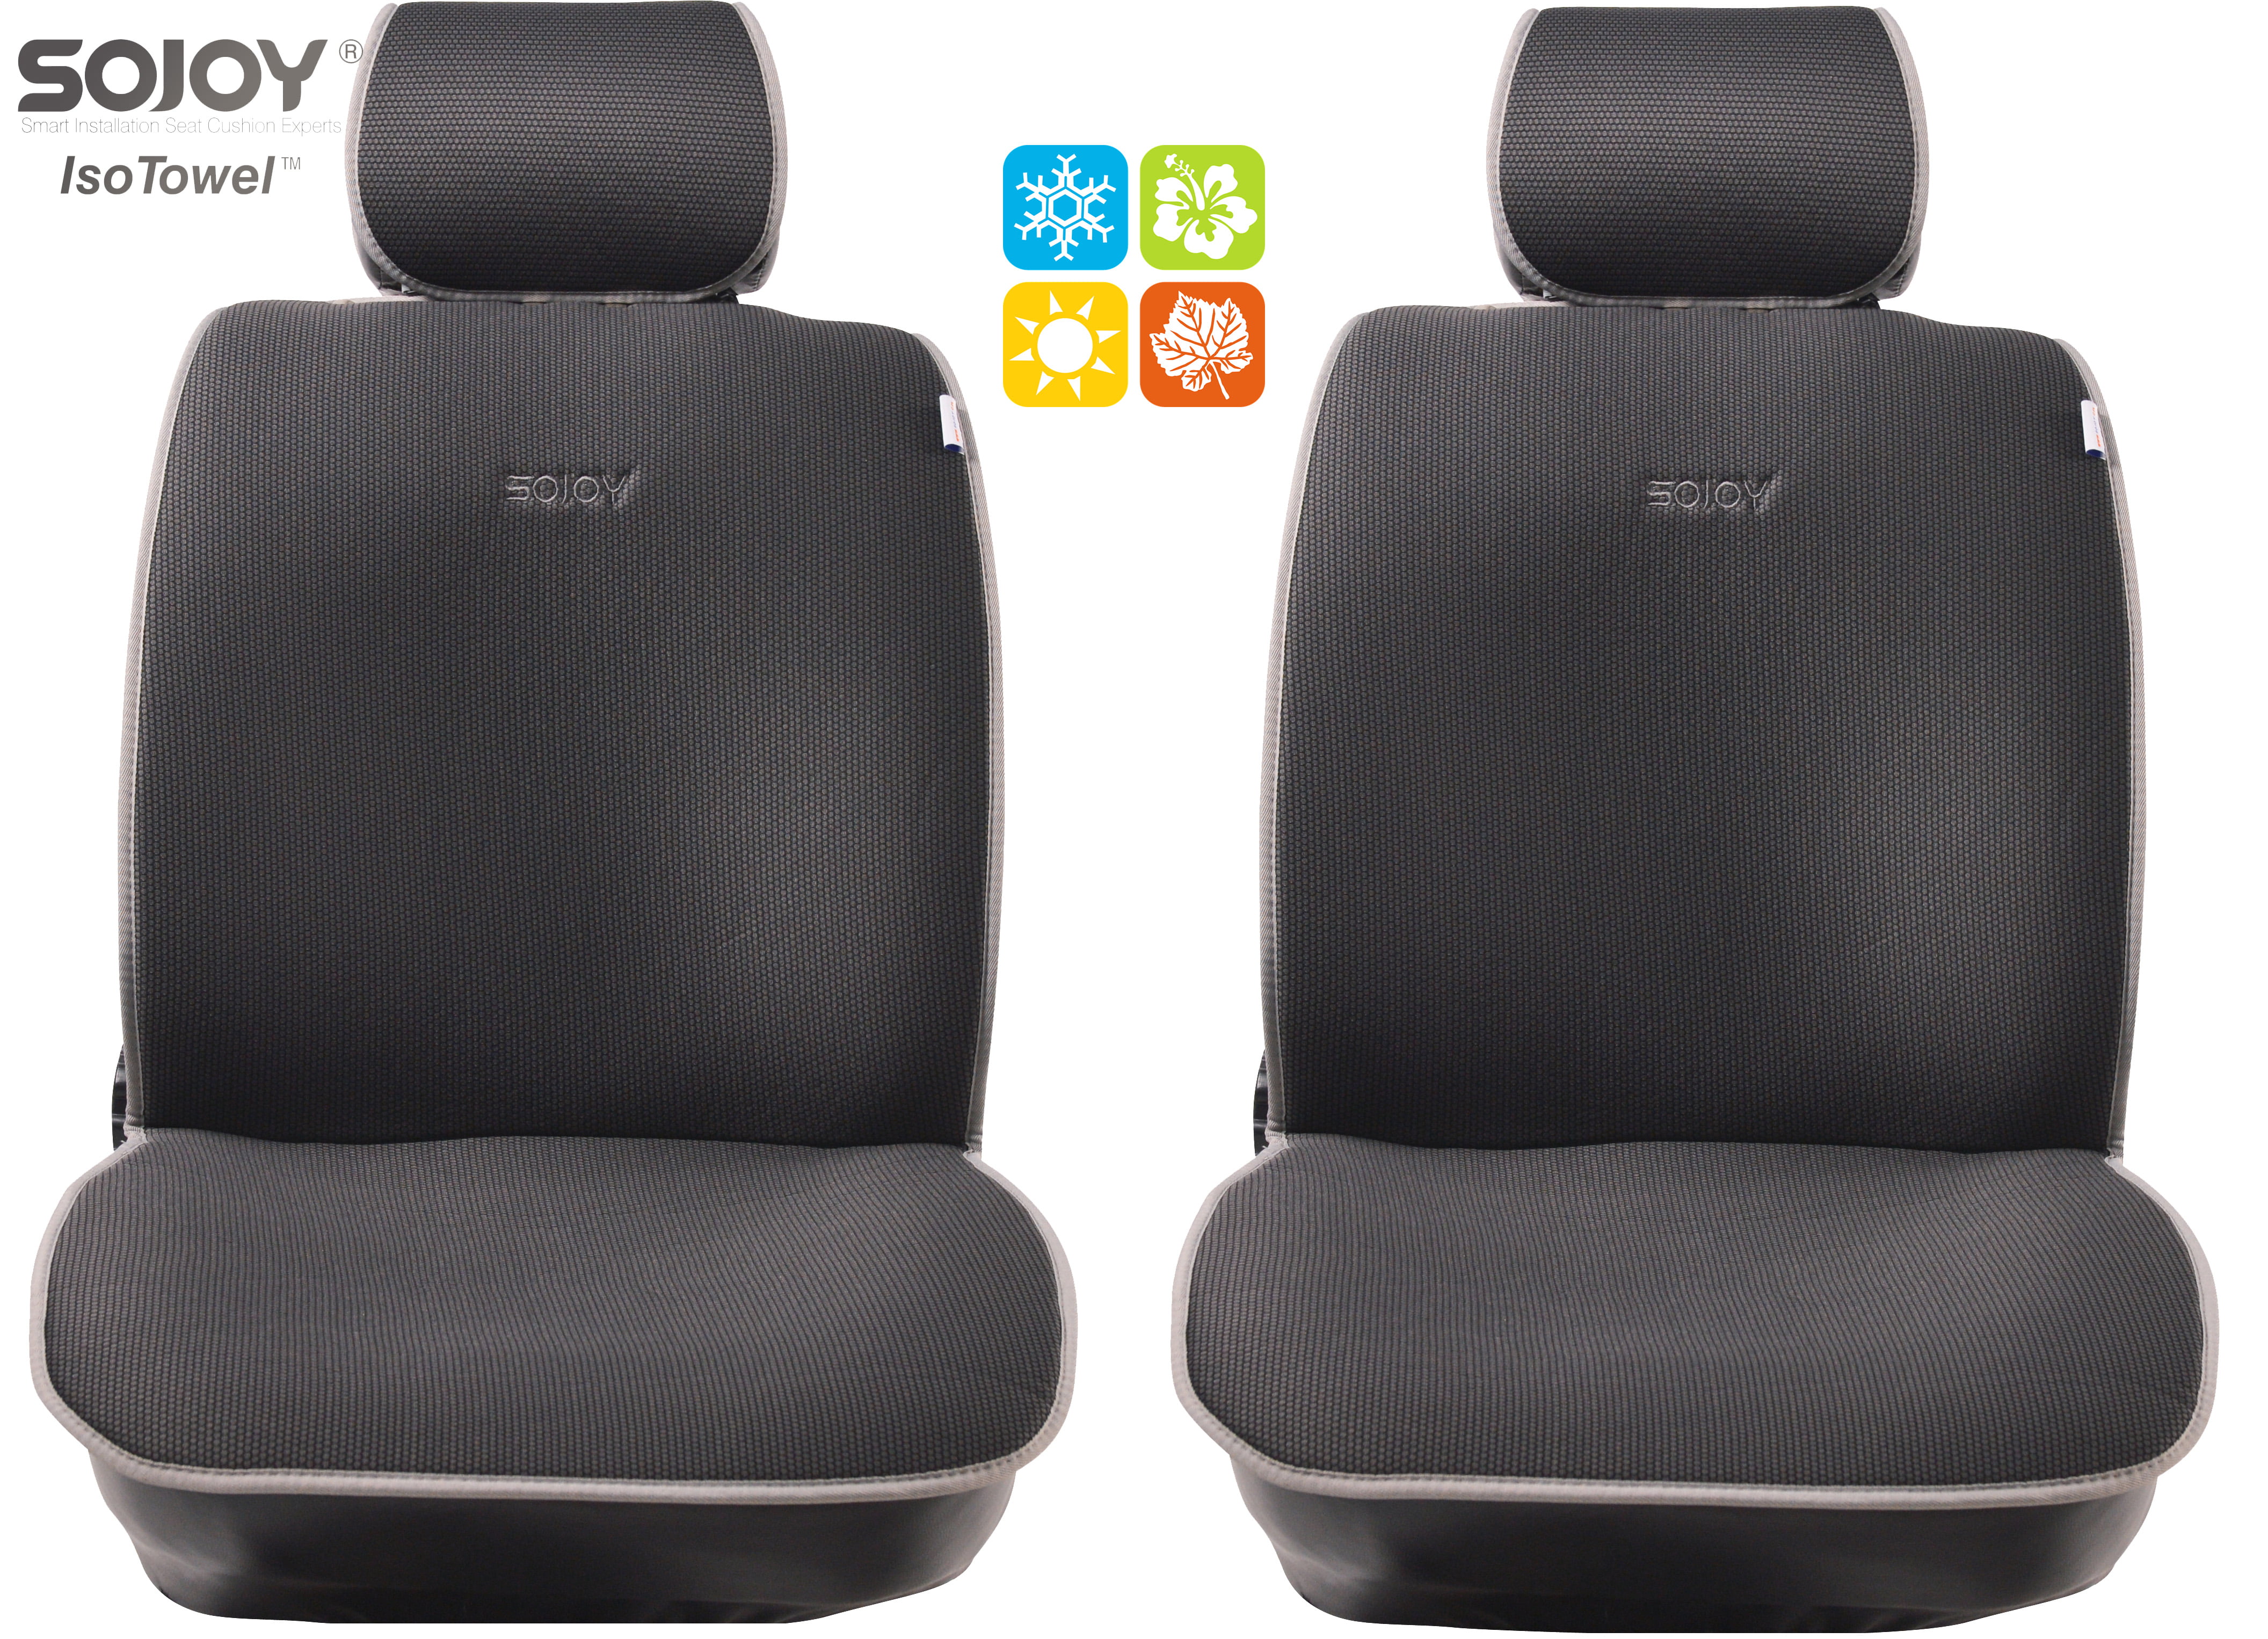 2 seats, 5 pc. kit Green Summer Universal Car Seat Cover - SoJoy